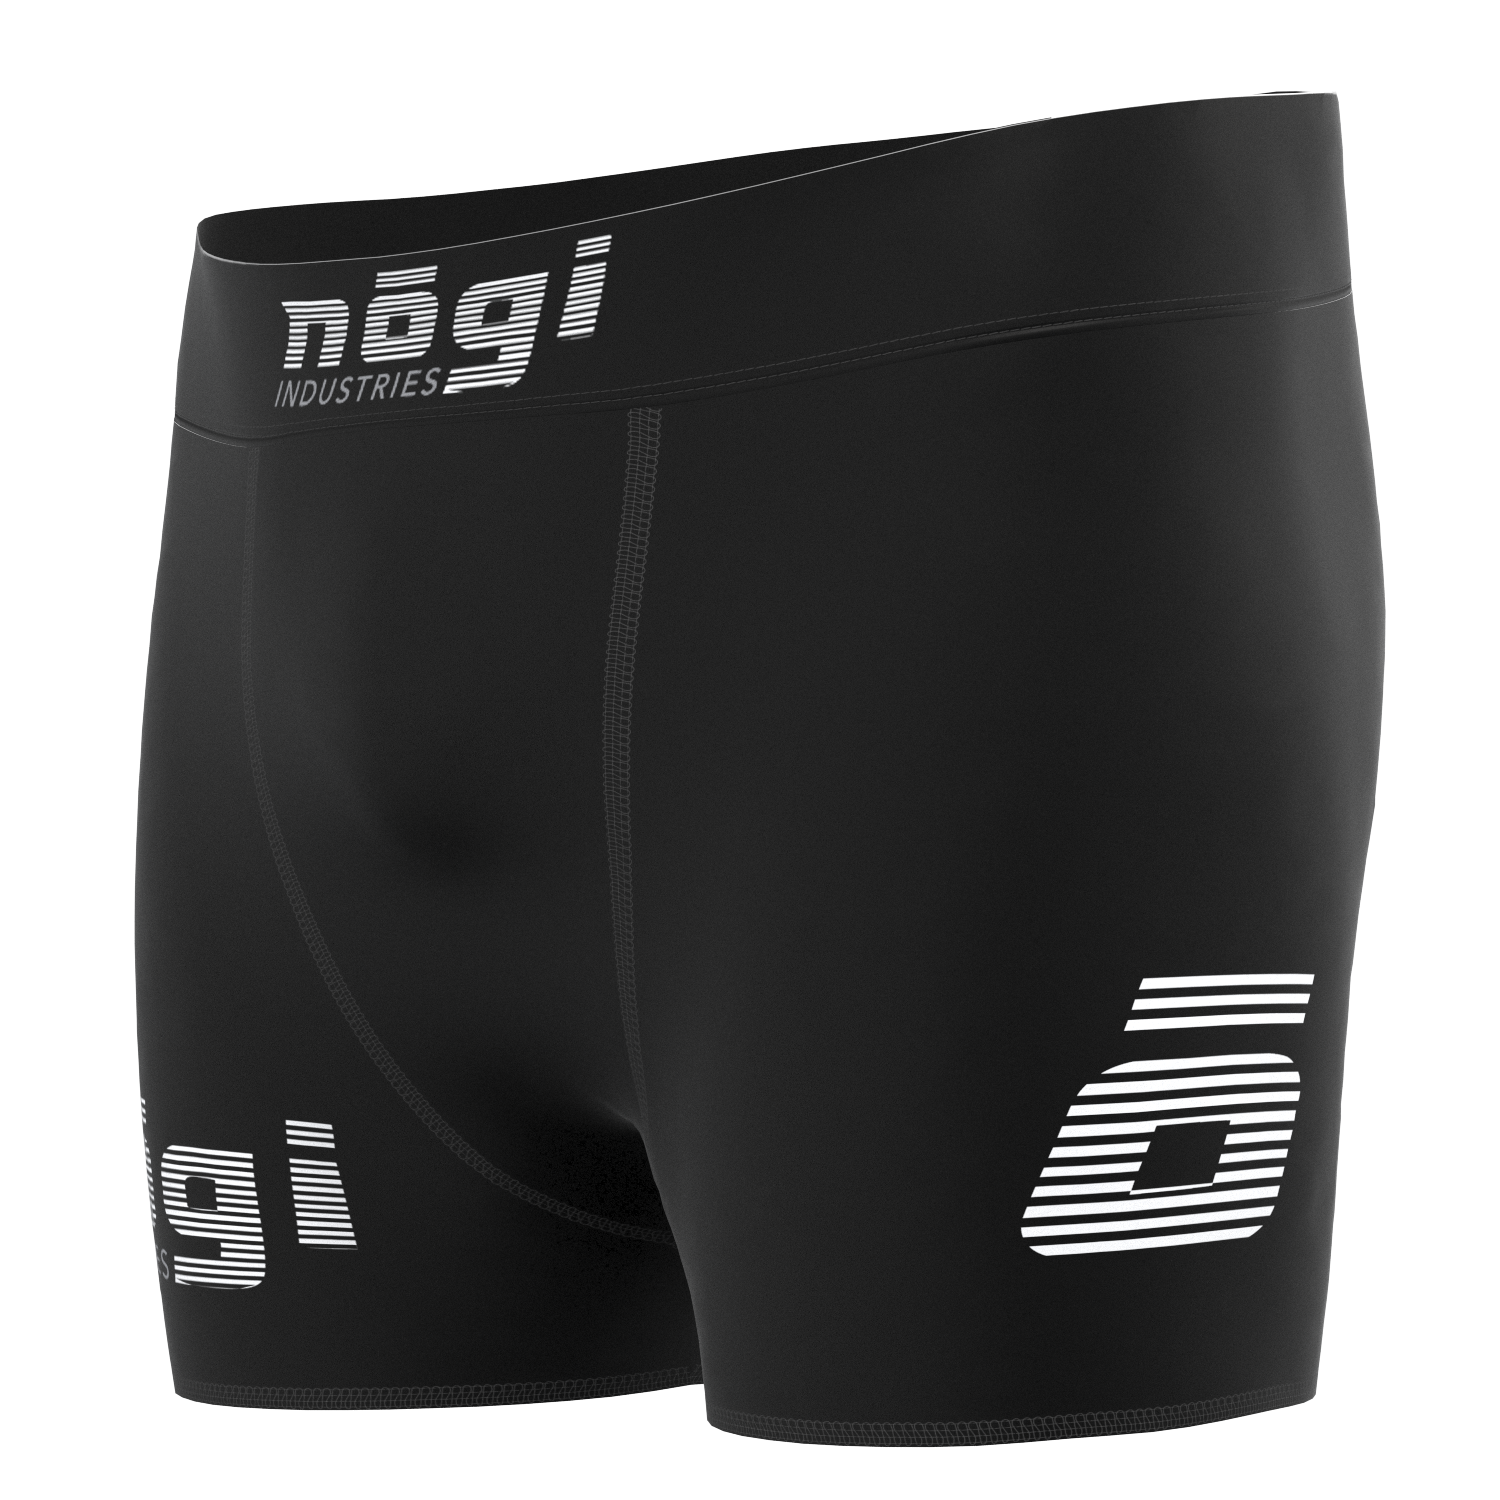 Nogi Core 2022 Vale Tudo Shorts Black Left